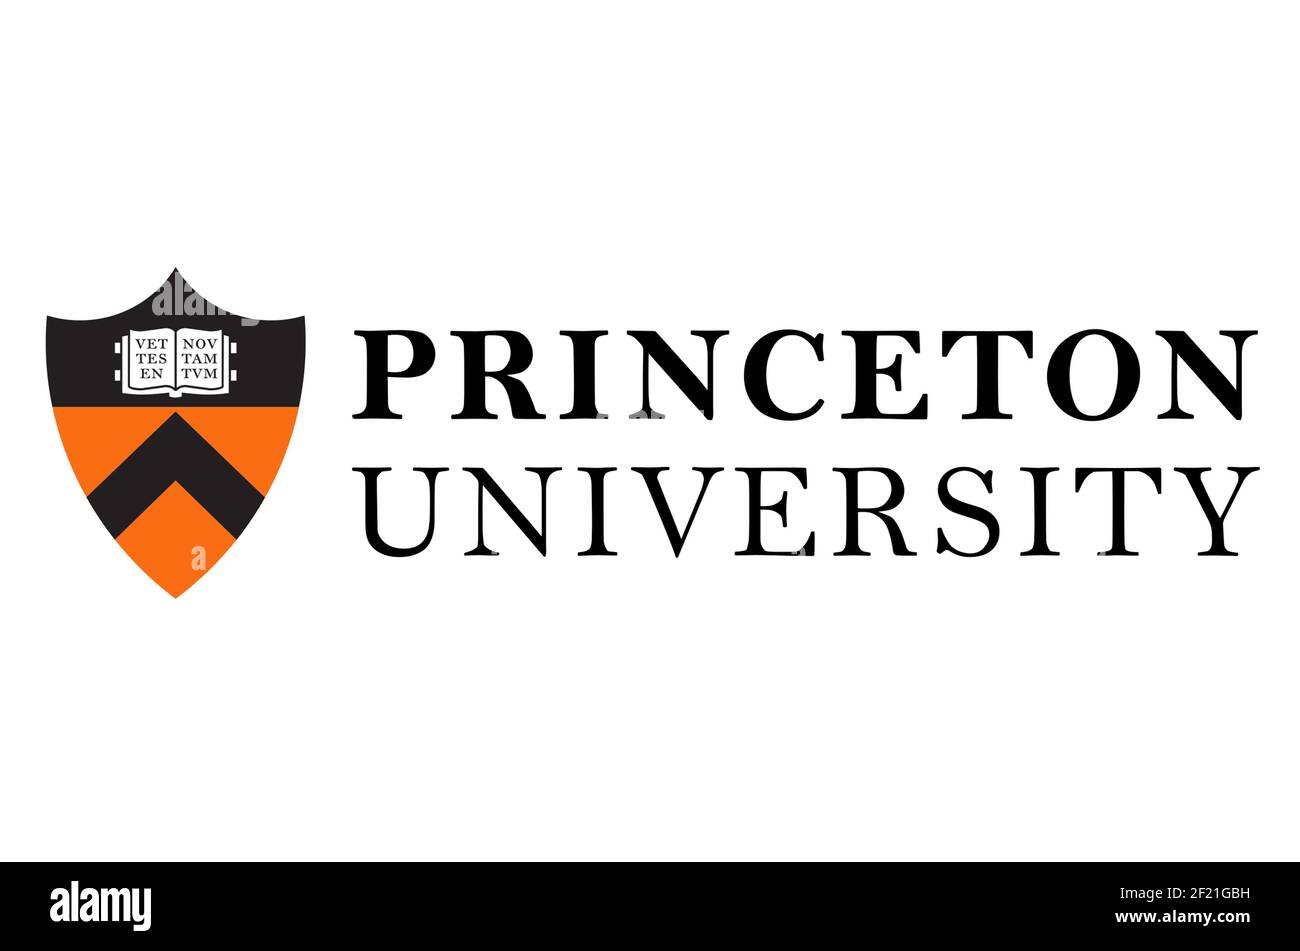 Princeton University logo Stock Photo